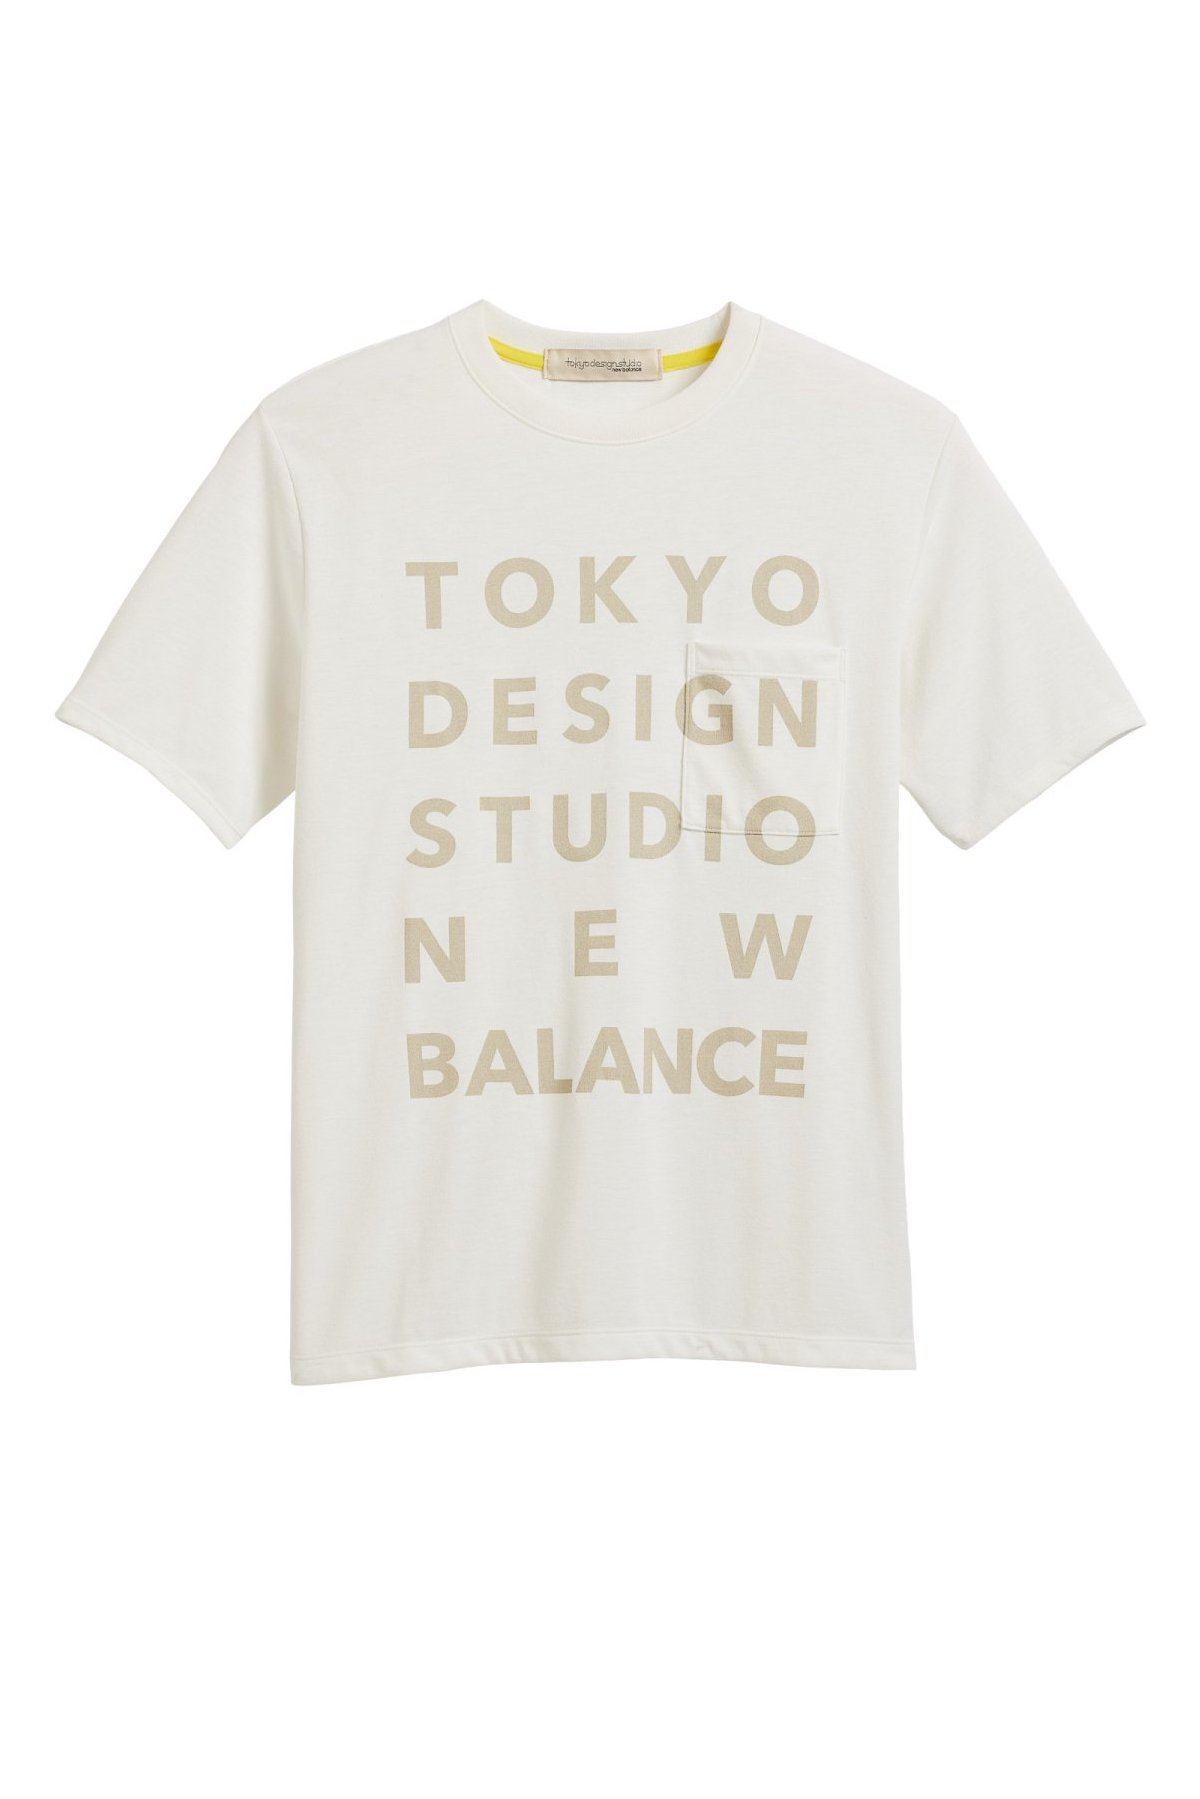 TOKYO DESIGN STUDIO New Balance 東京デザインスタジオ ニューバランス 通販 正規店 フェートン - Phaeton  Smart Clothes Online Store